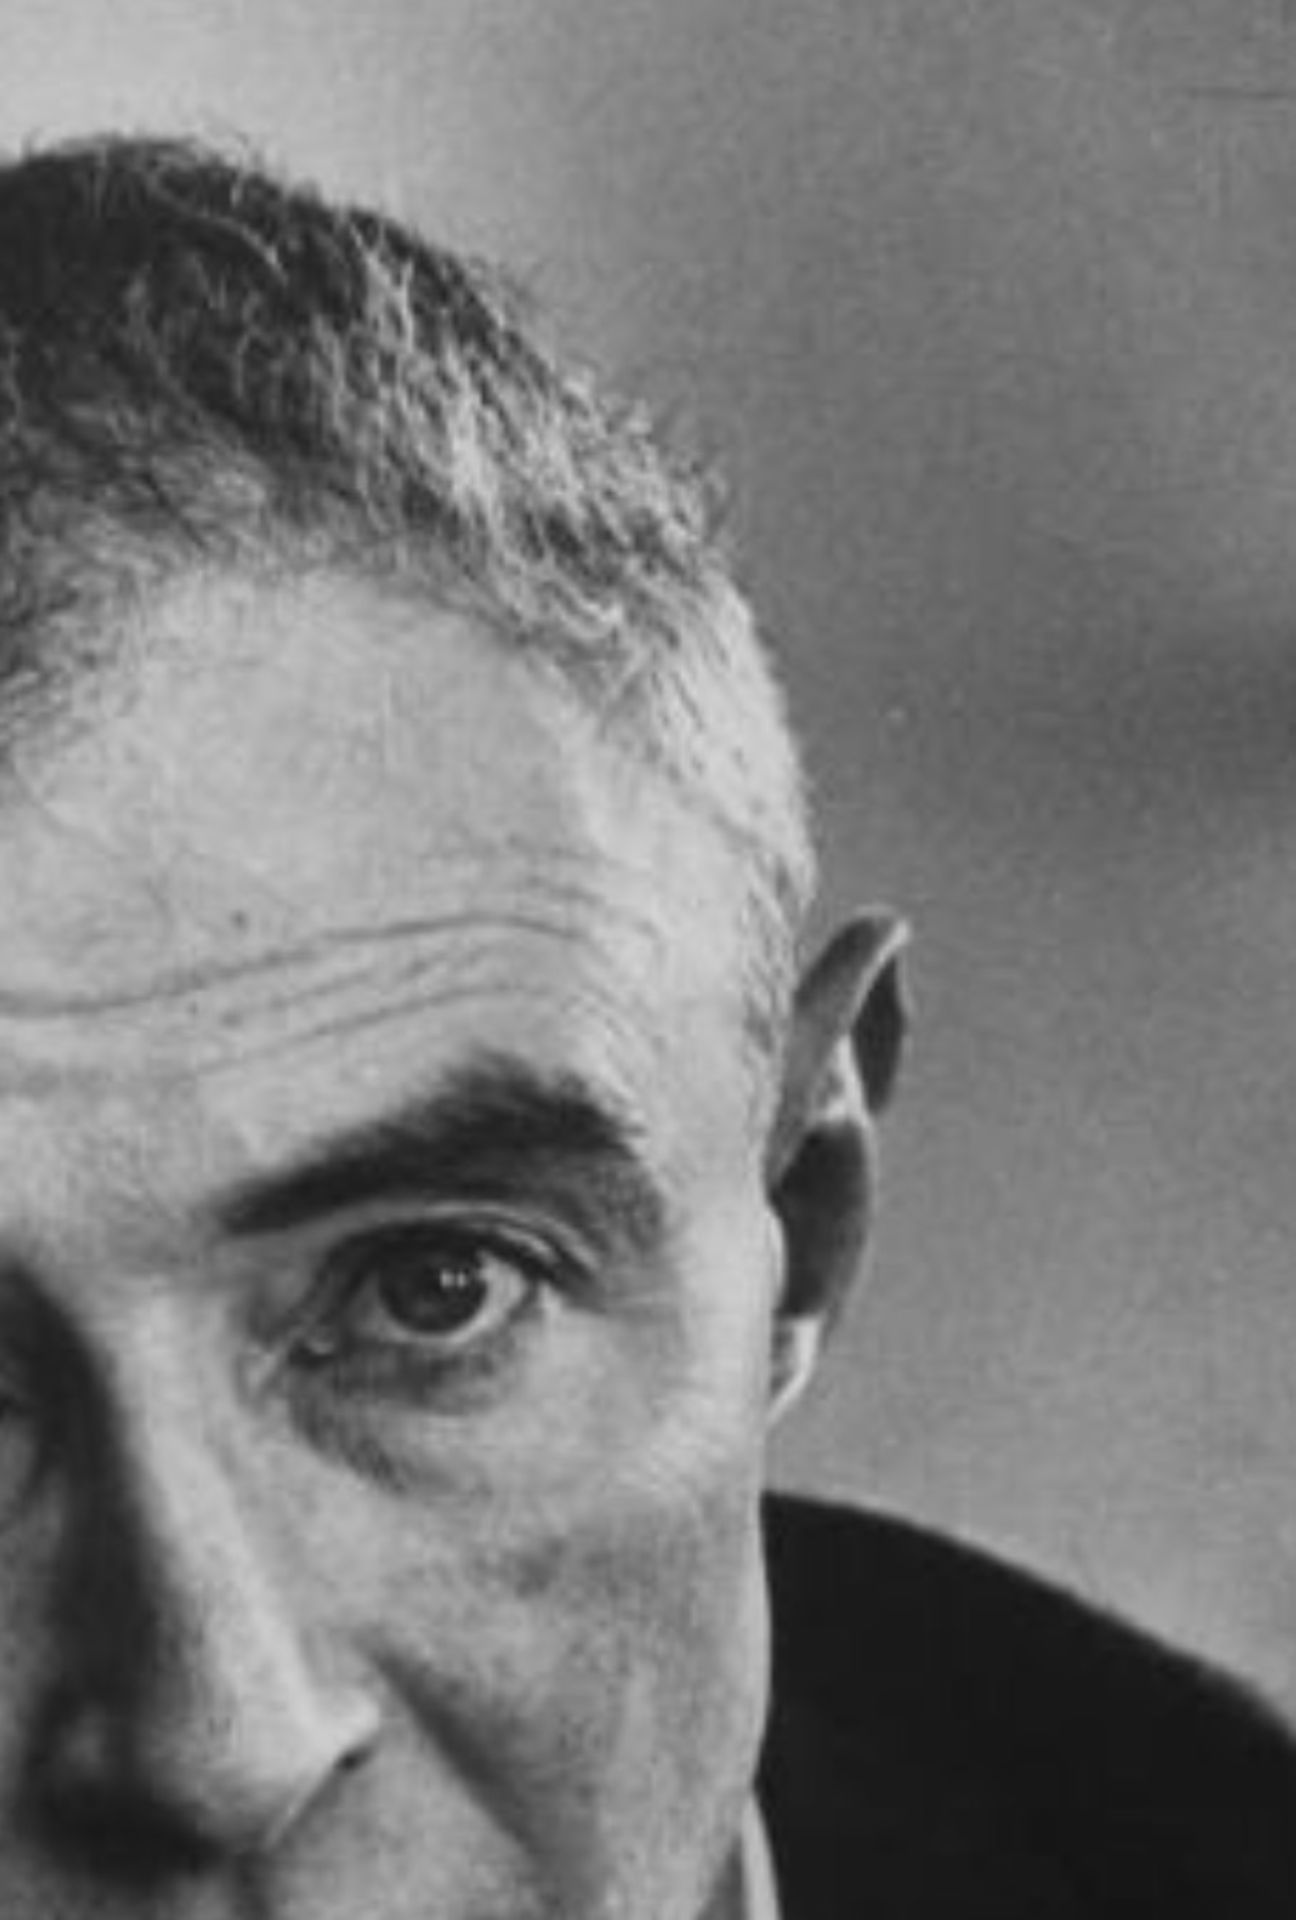 Robert Oppenheimer "Self Portrait" Photo Print - Image 3 of 5